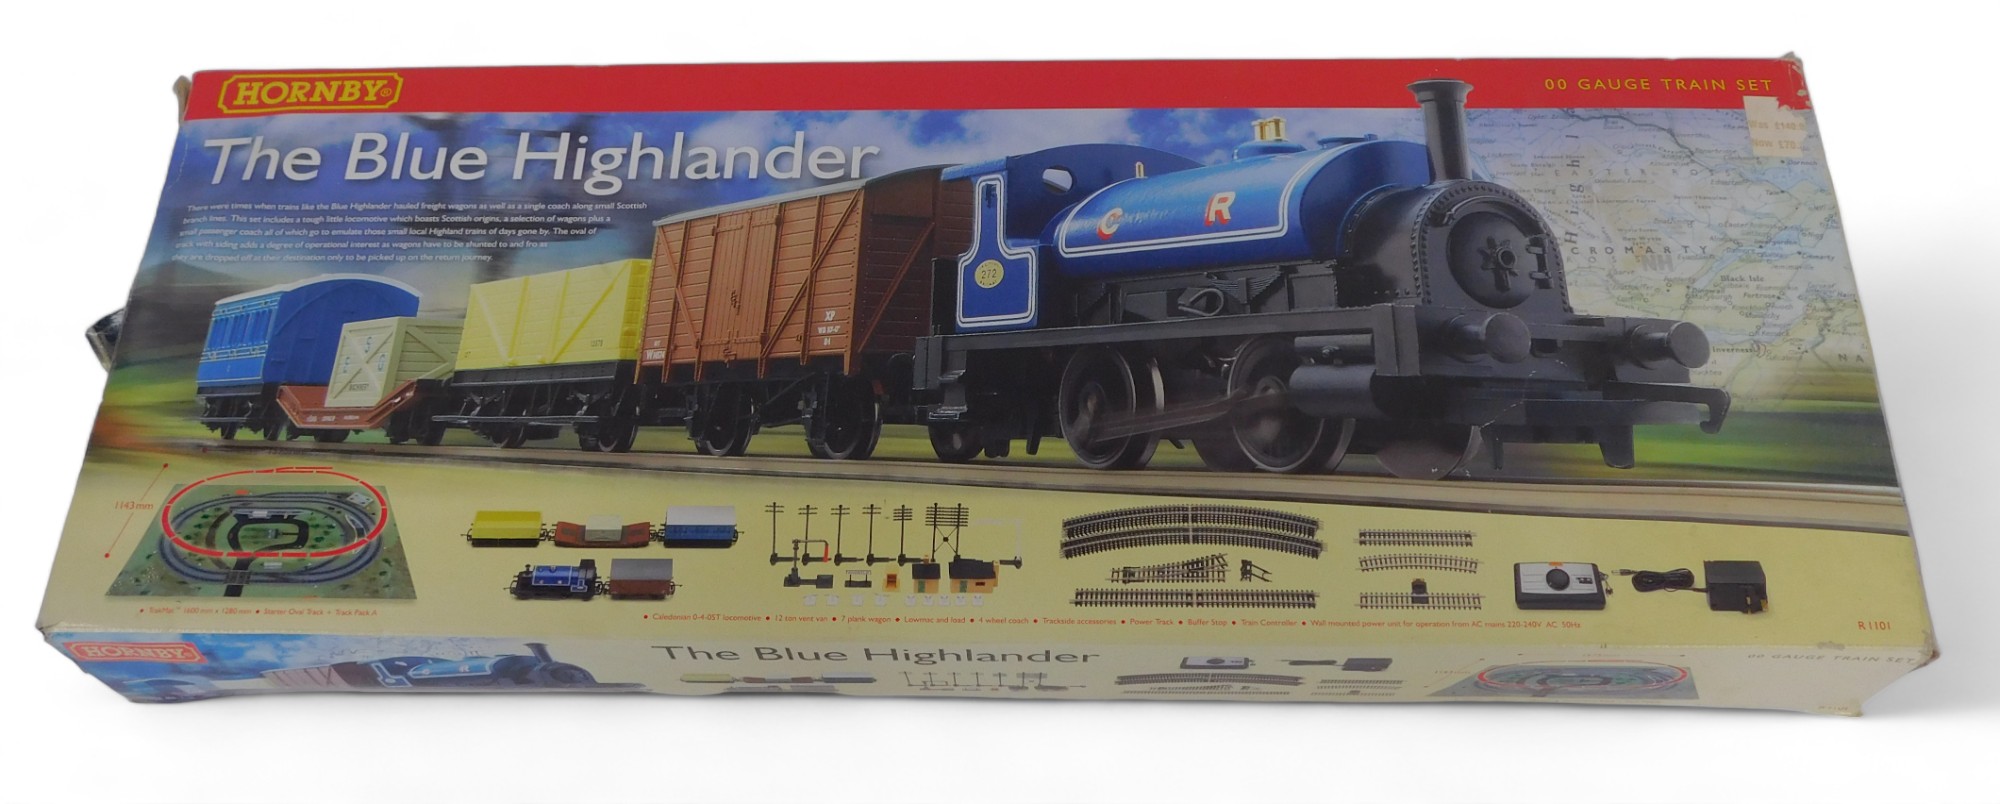 A Hornby OO gauge train set R1101 The Blue Highlander, boxed.